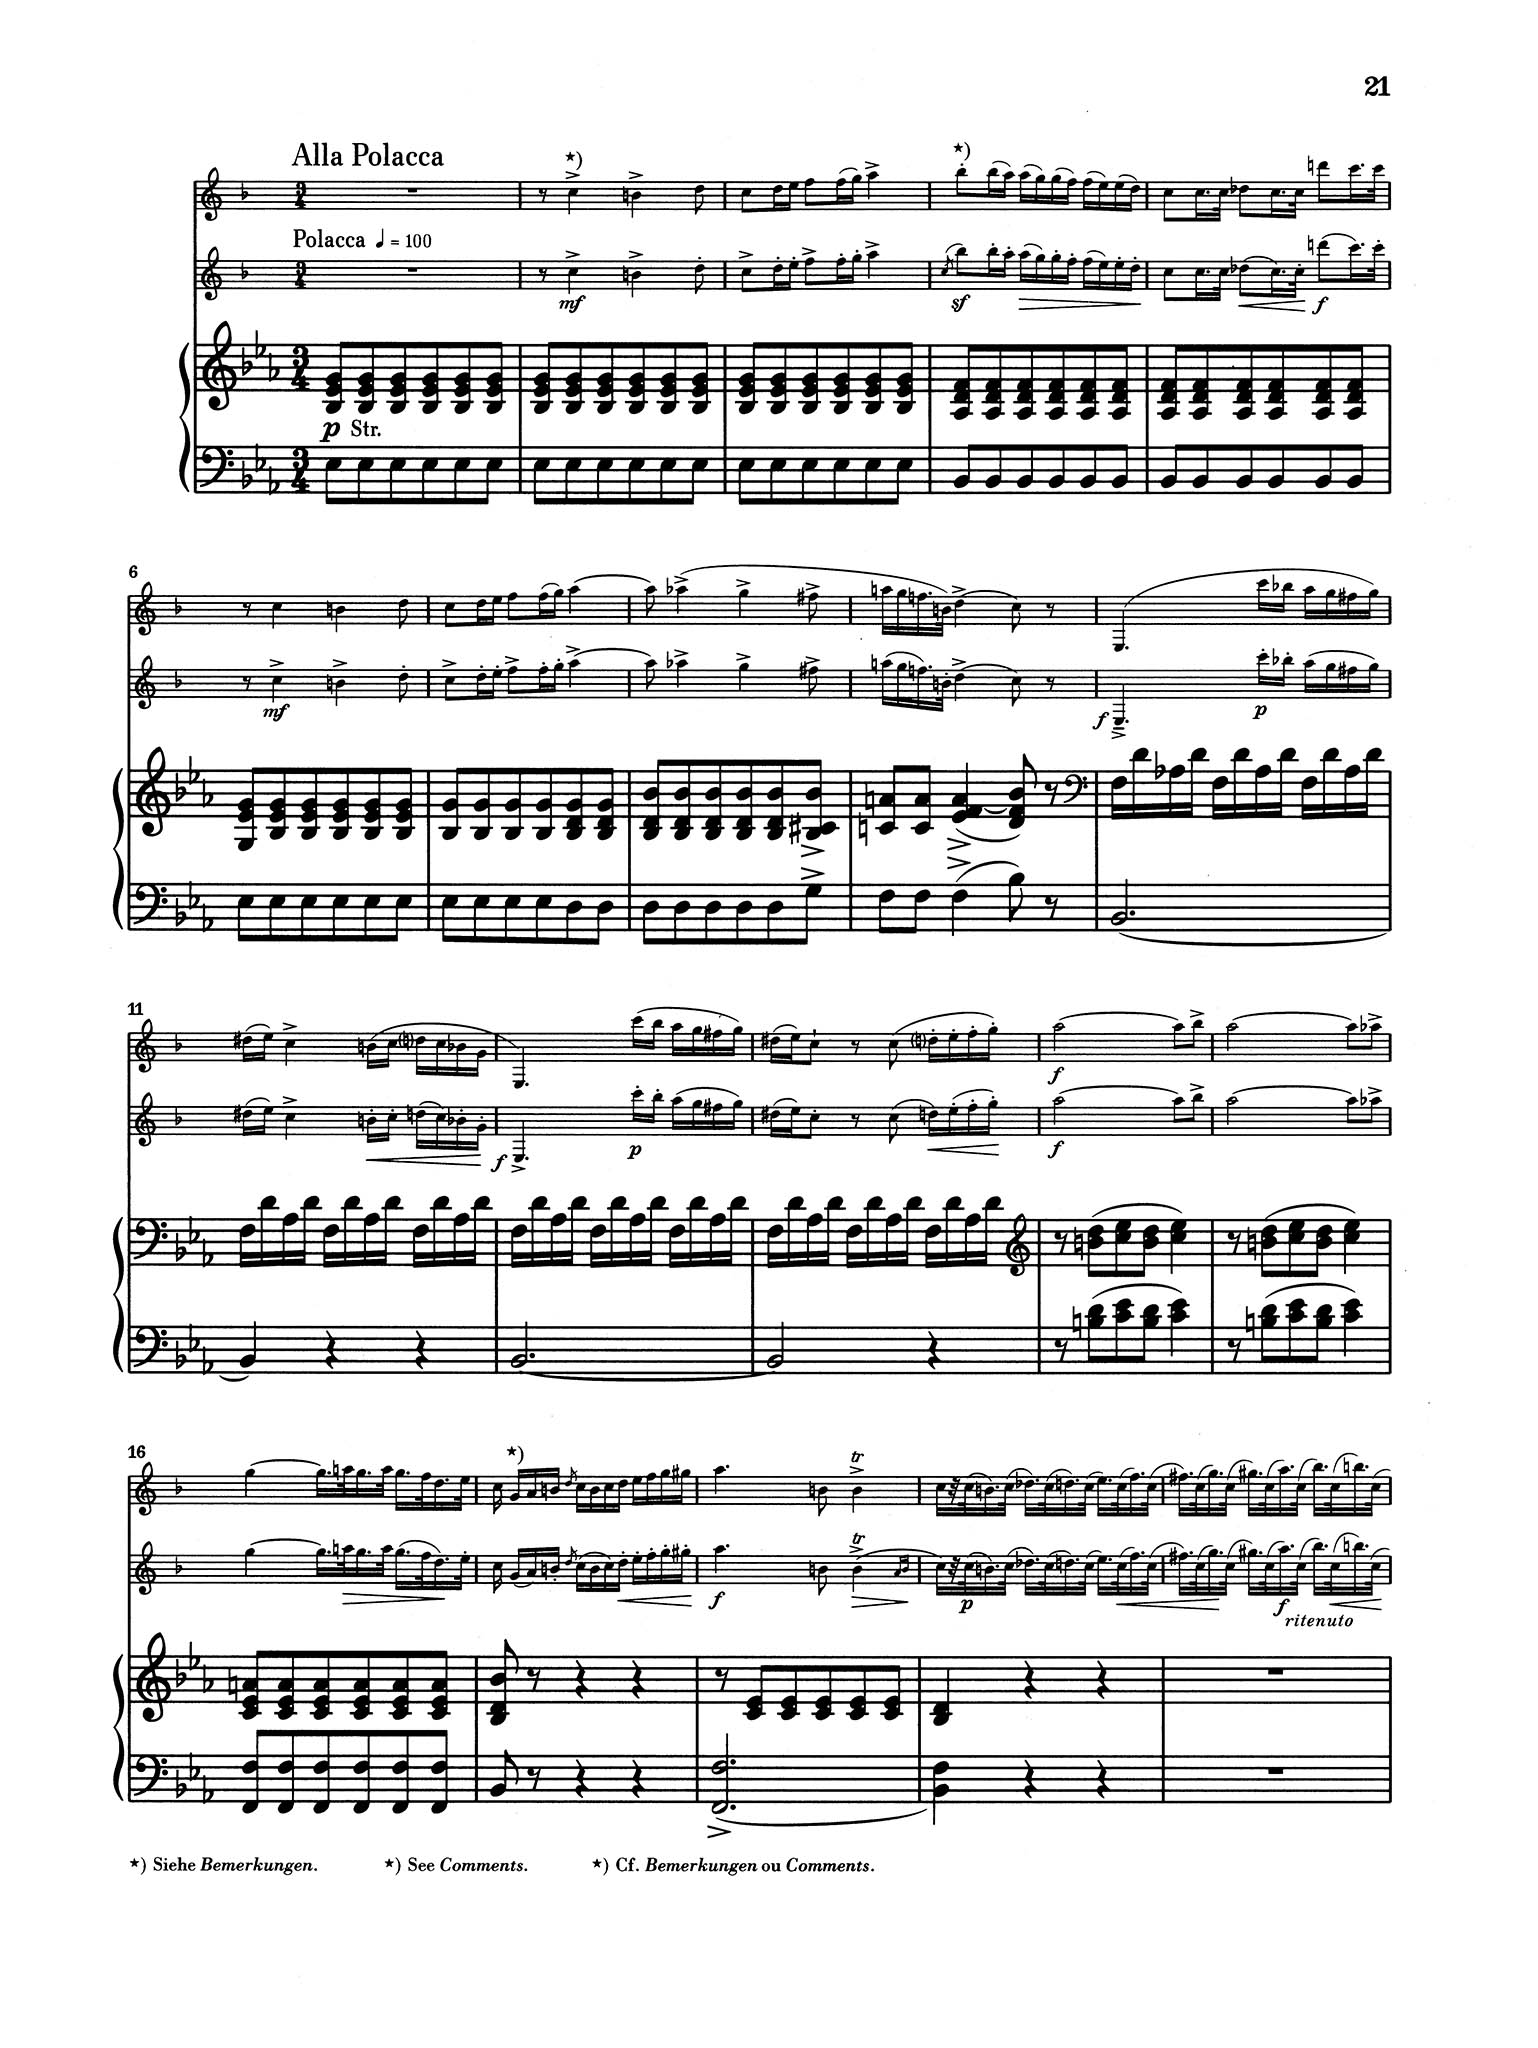 Clarinet Concerto No. 2 in E-flat Major, Op. 74 - Movement 3